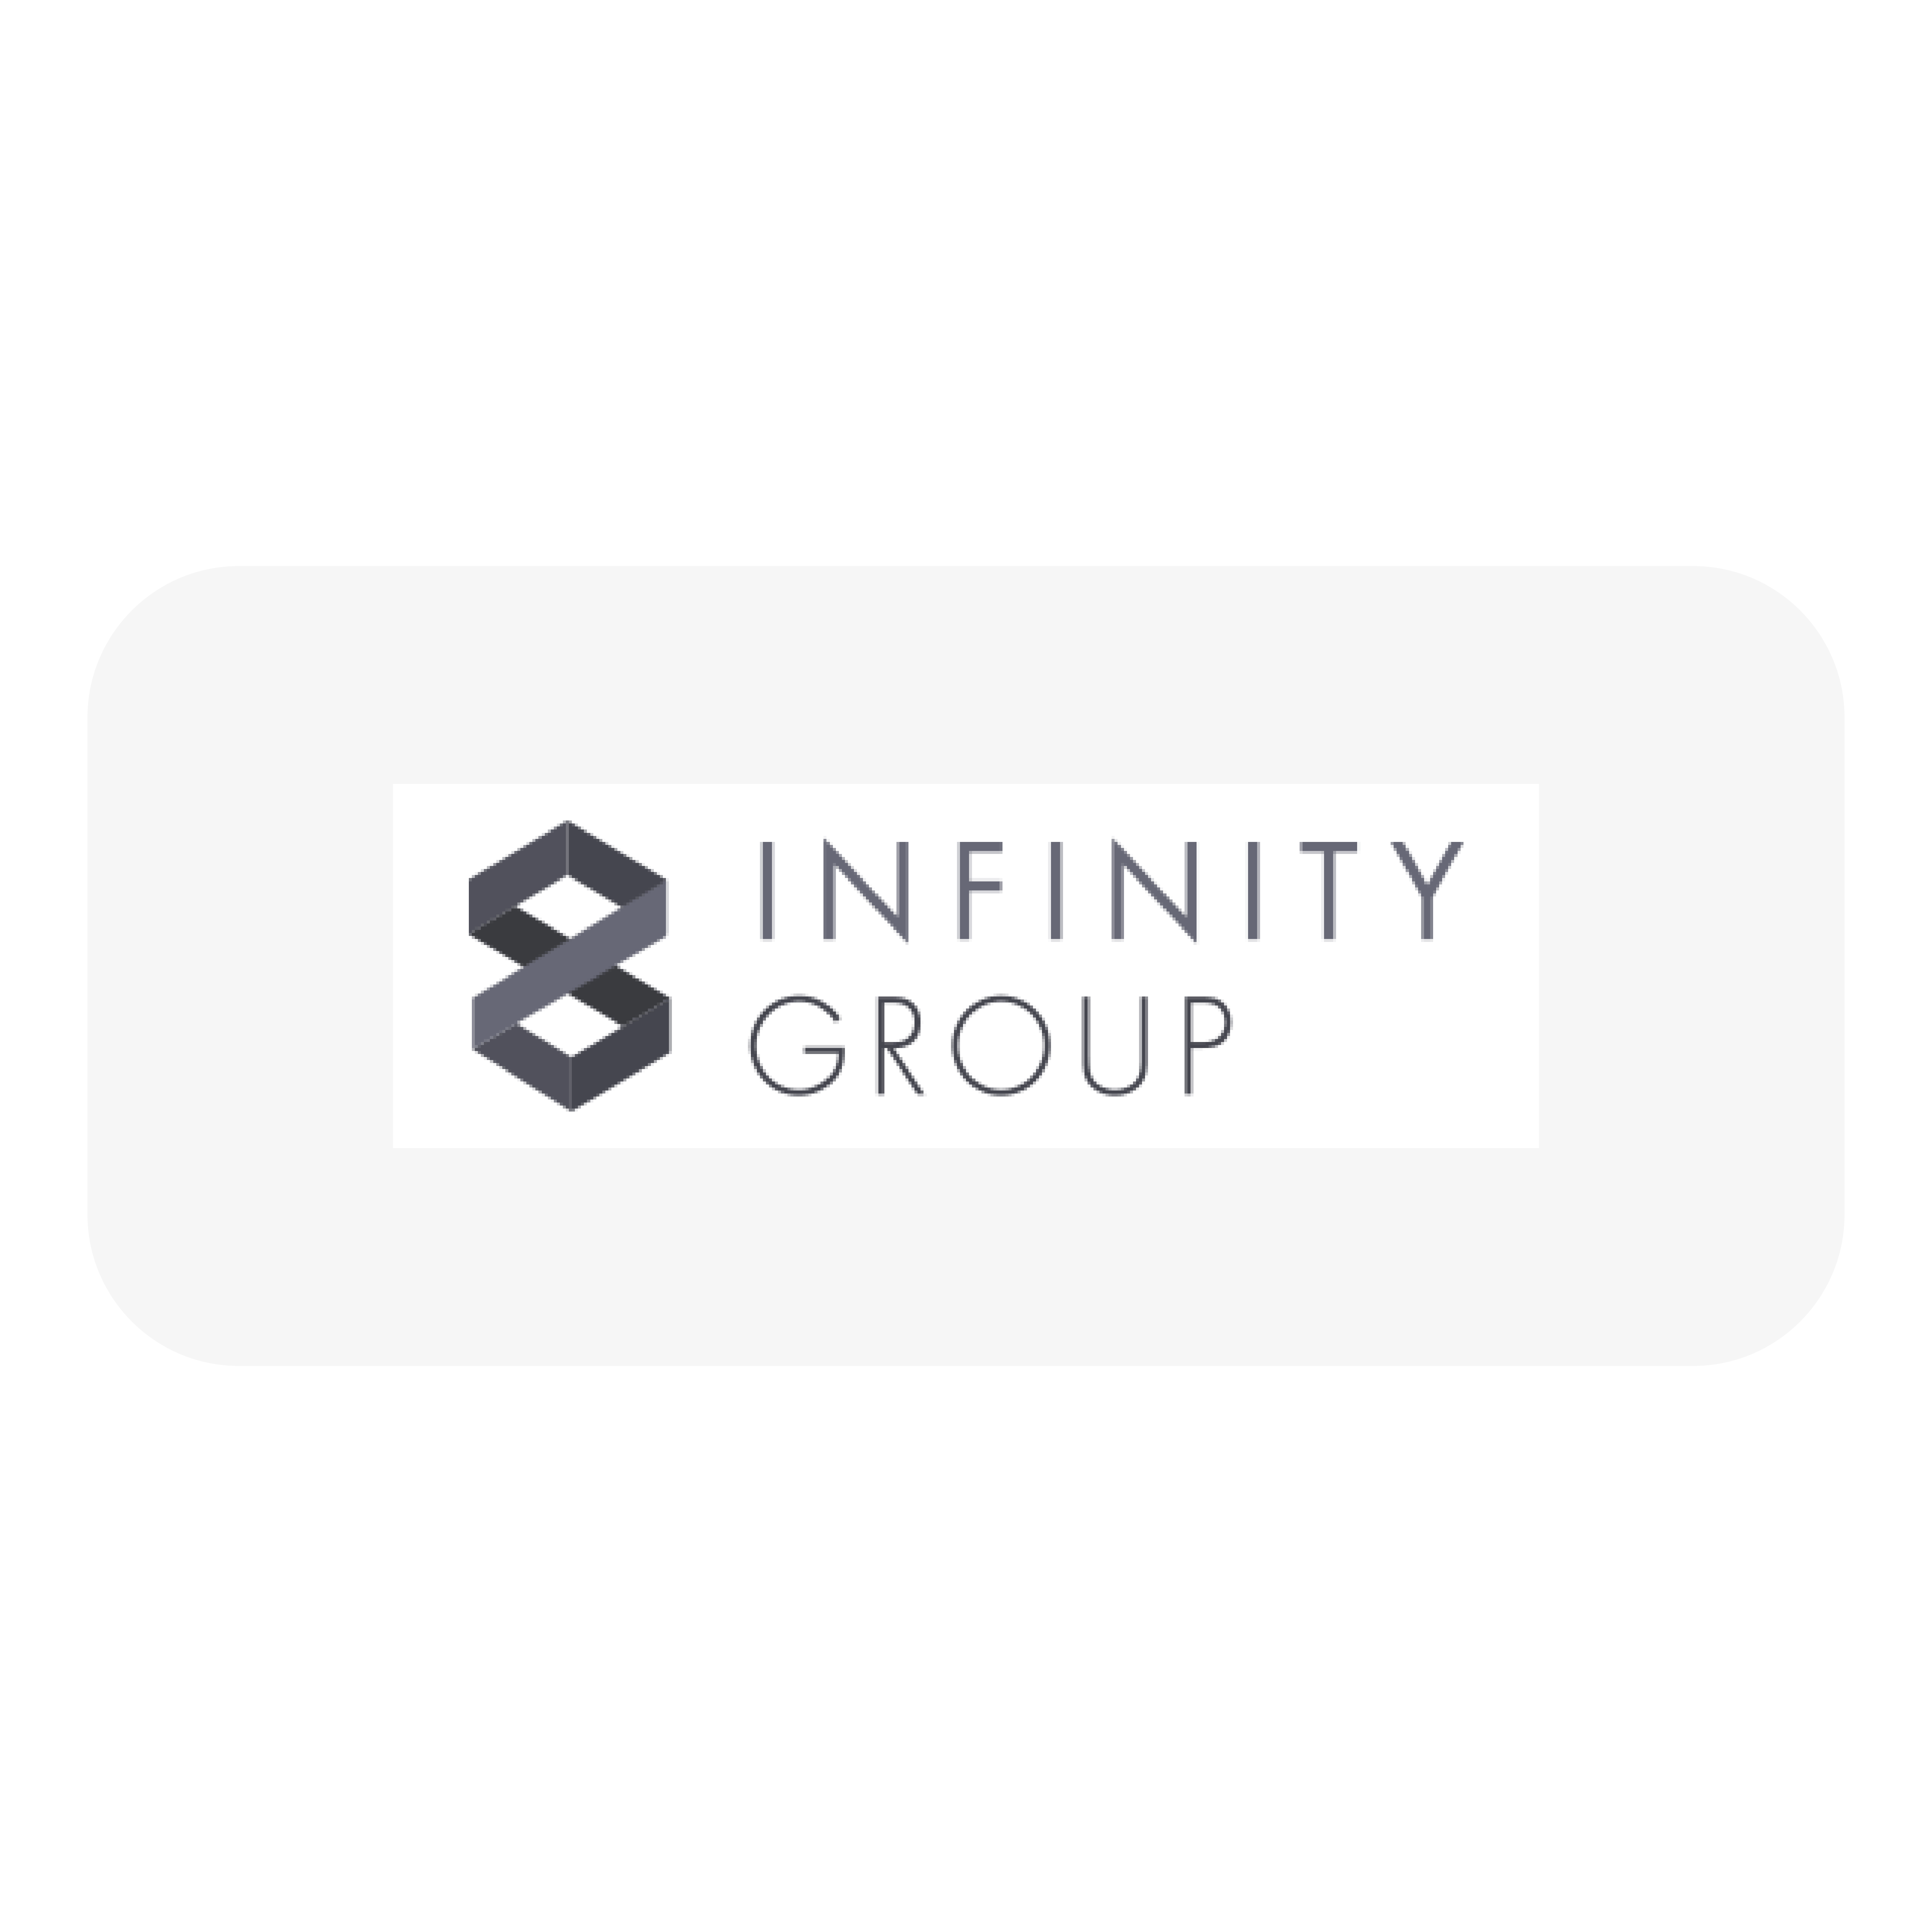 infinity group-01